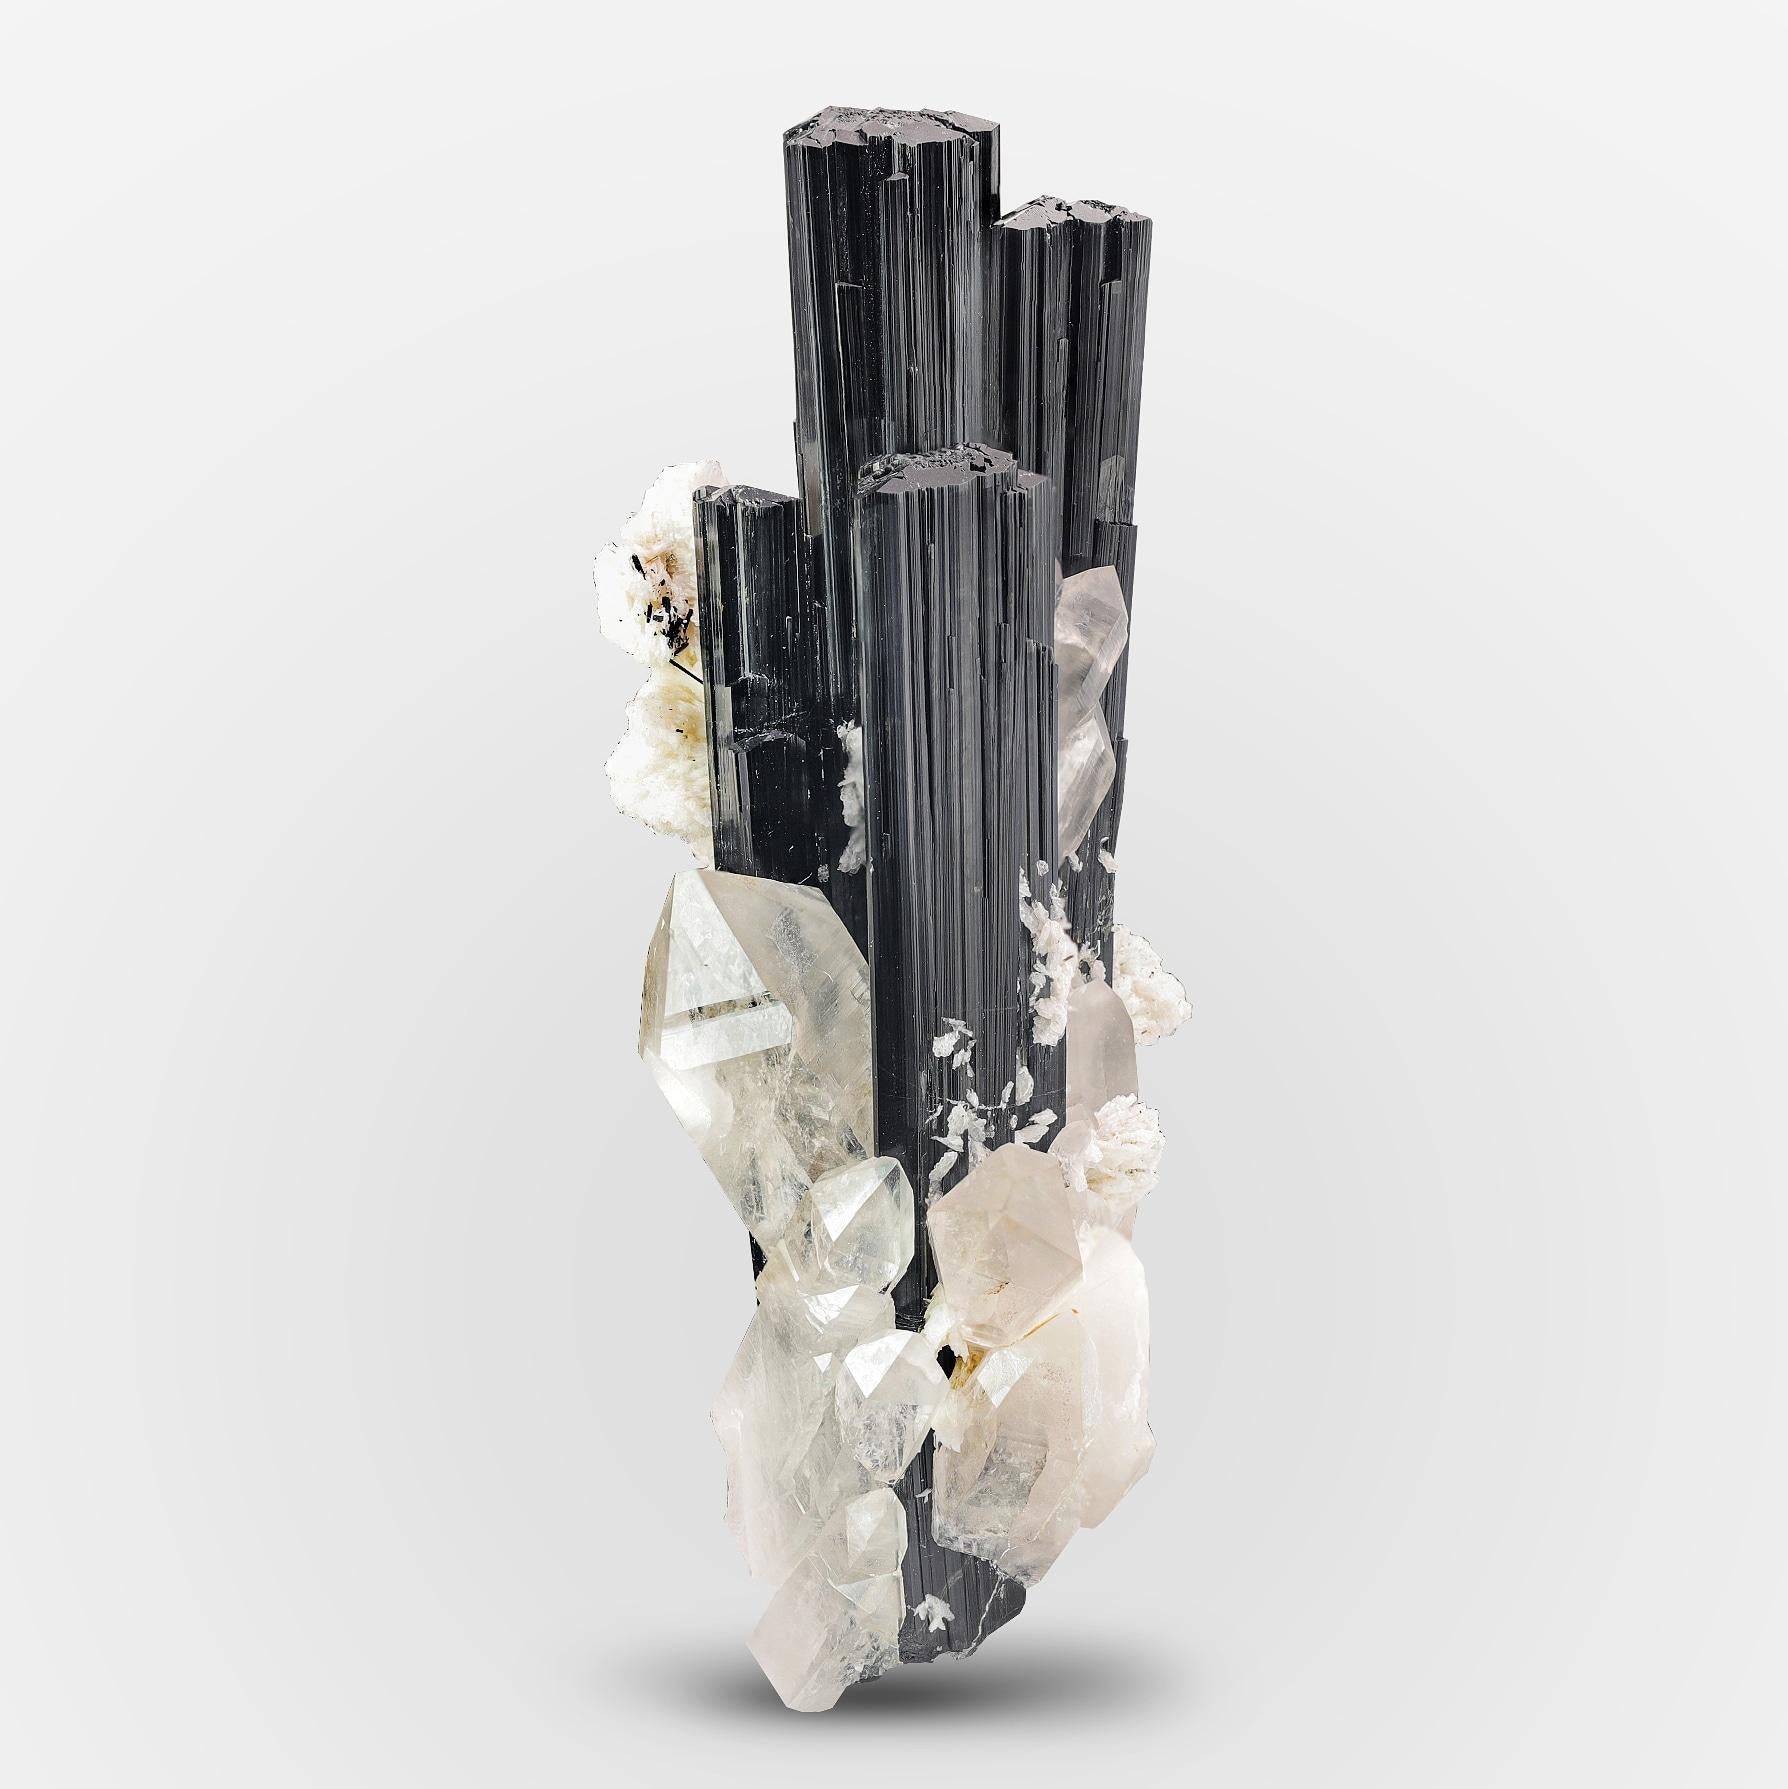 Uncut Sculptural Parallel Schorl Black Tourmaline Crystals With Quartz From Pakistan For Sale